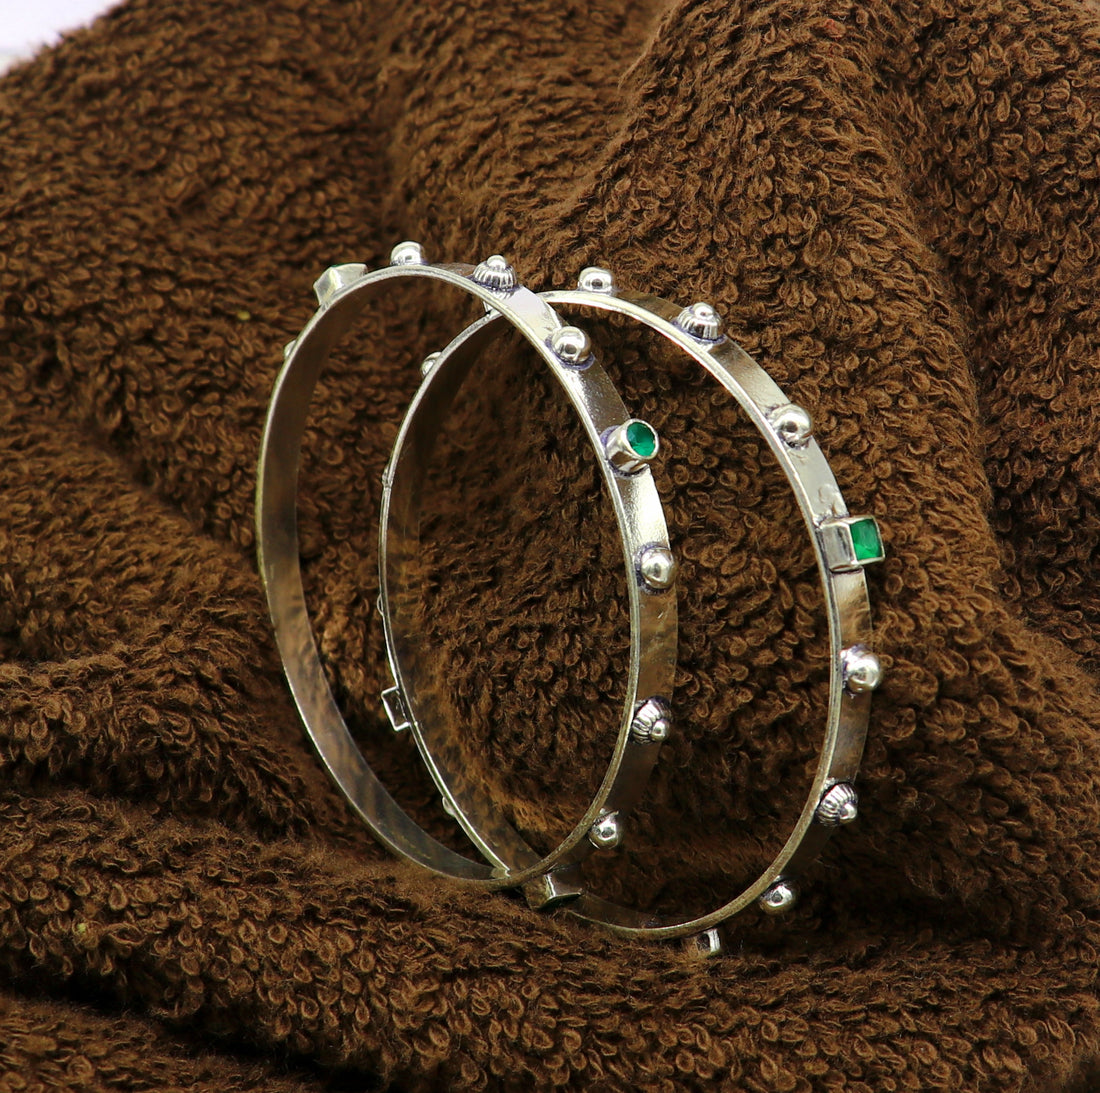 Amazing unique design handmade 925 sterling silver plain design green gemstone bangles bracelet, tribal stylish fancy jewelry nba117 - TRIBAL ORNAMENTS